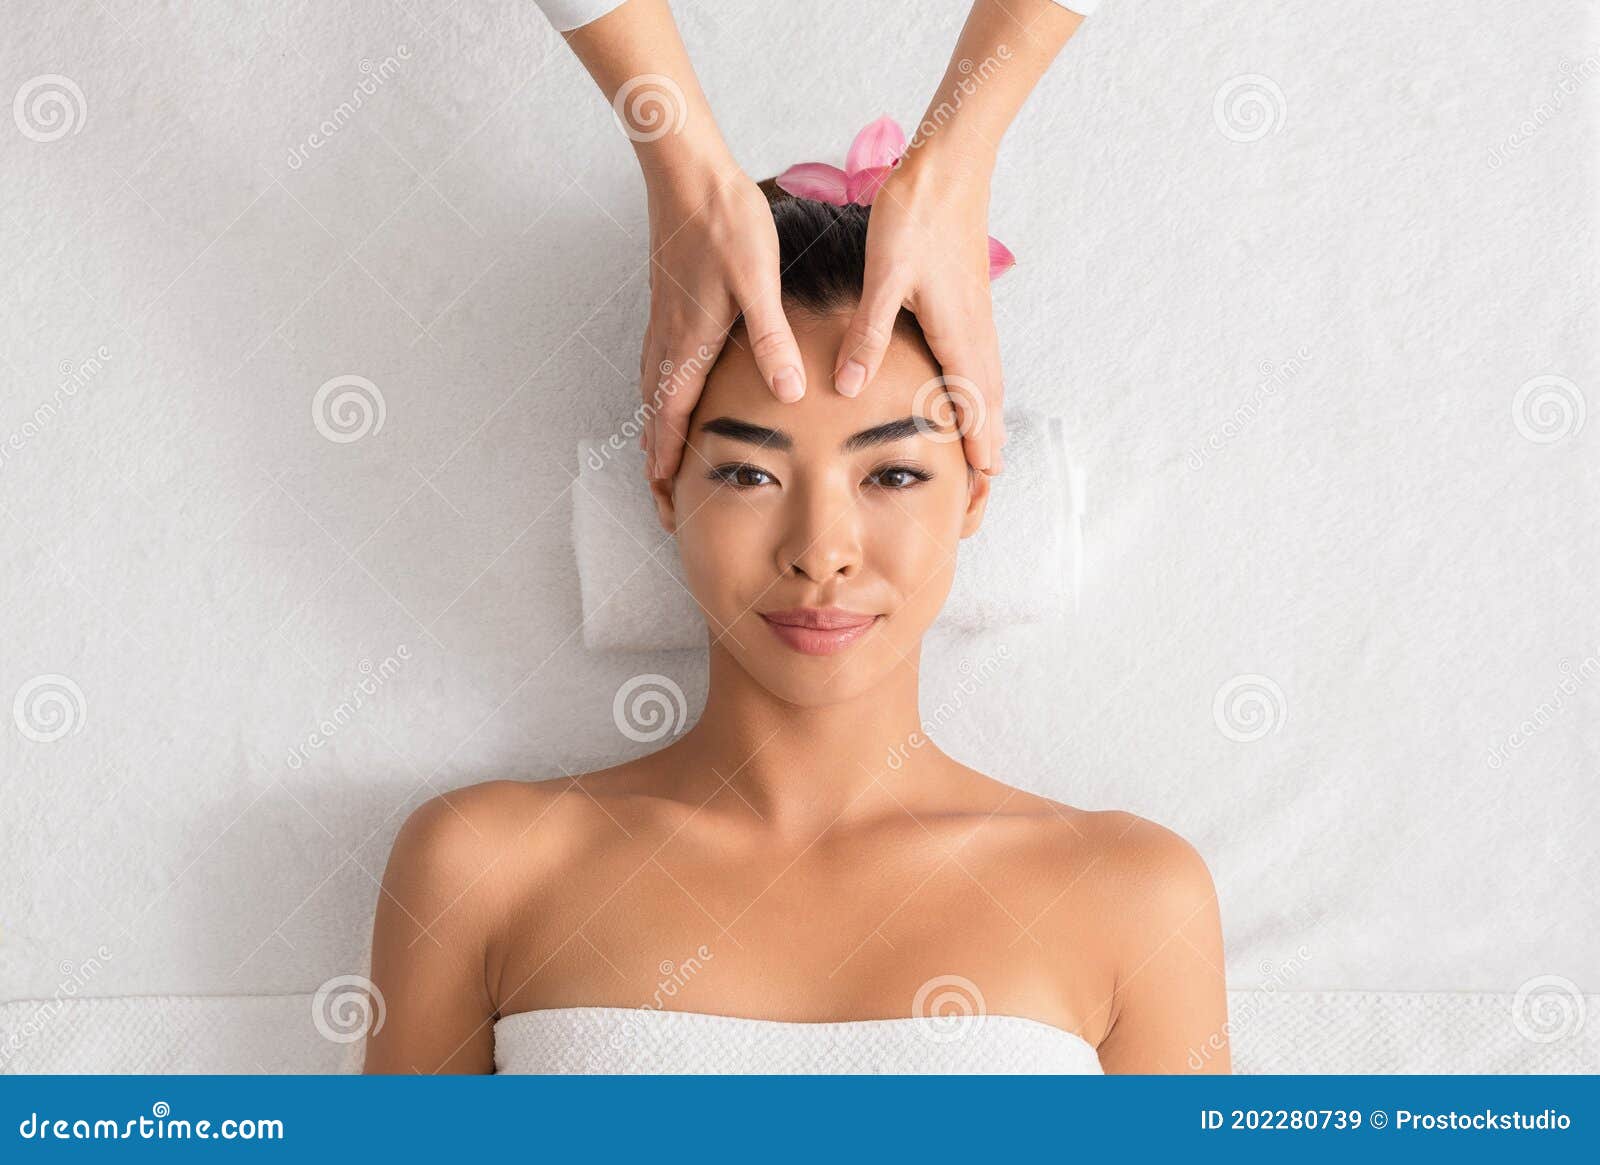 Young Asian Woman Enjoying Anti Aging Facial Massage At Spa Salon Stock Image Image Of Facial